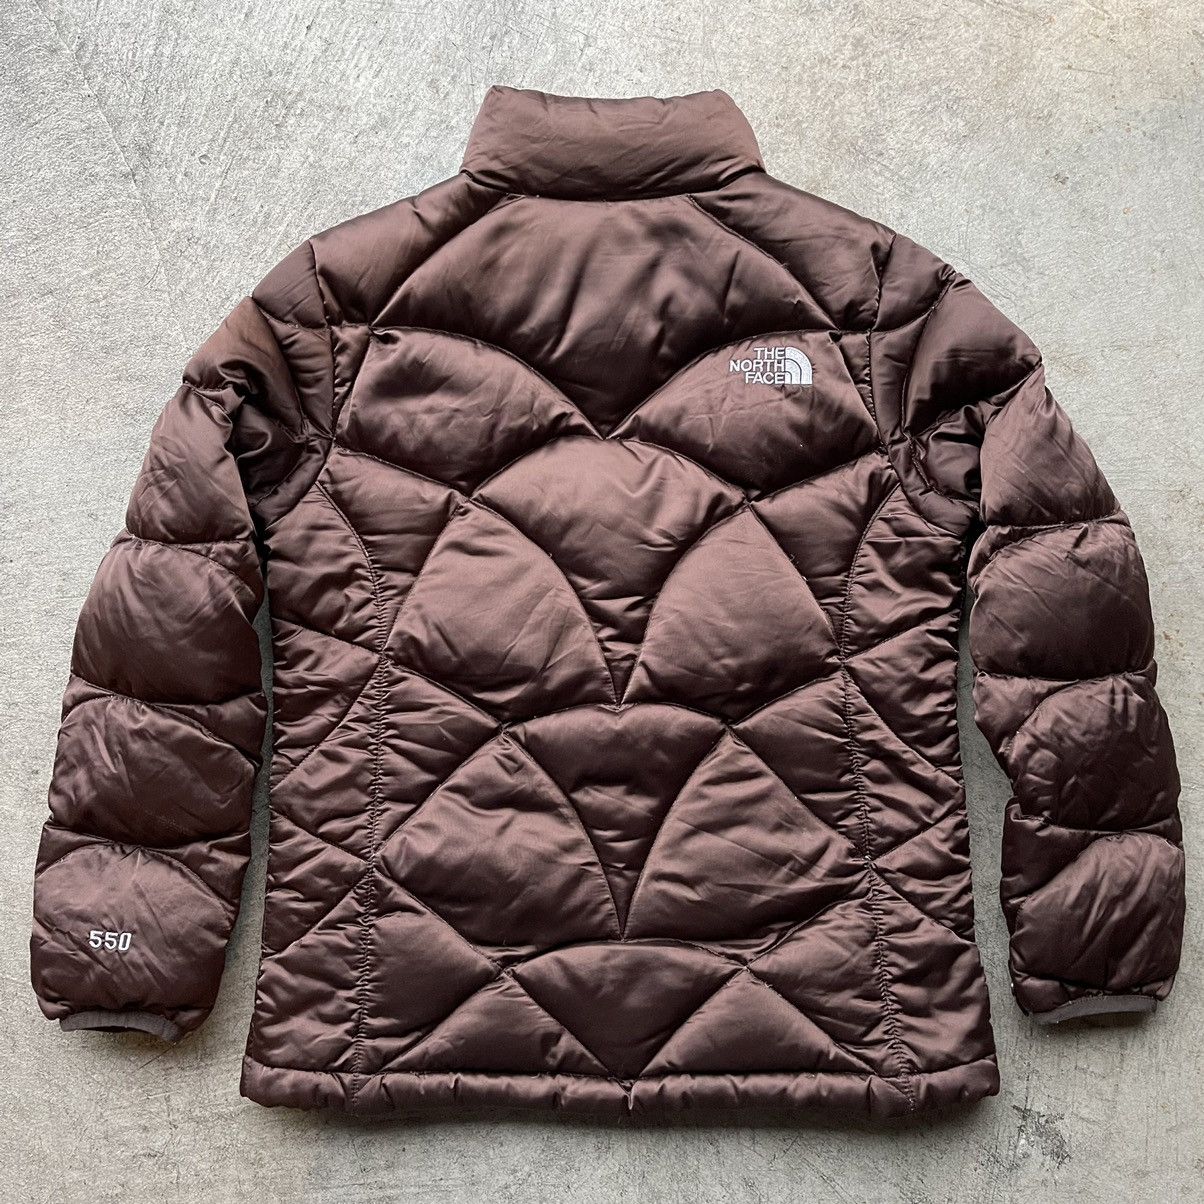 Vintage Brown North Face Puffer Jacket Nuptse 550 S Size US S / EU 44-46 / 1 - 4 Thumbnail